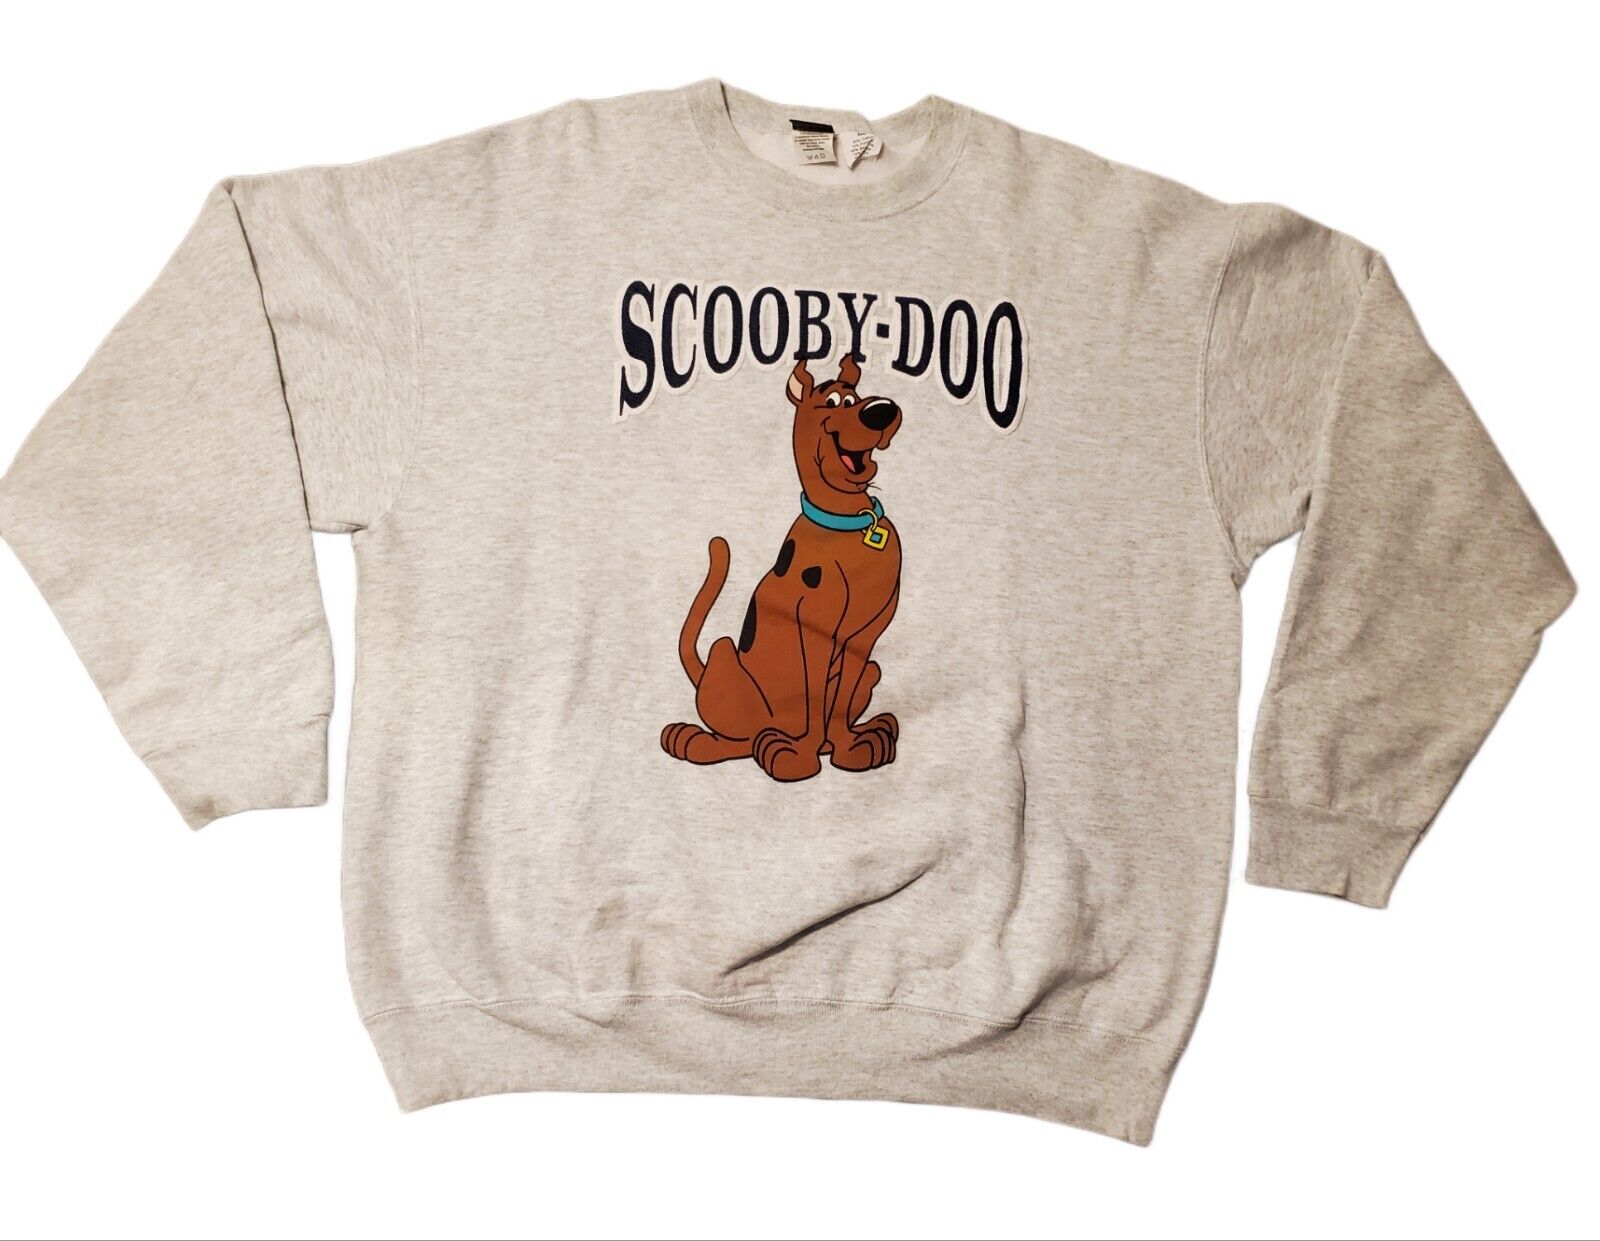 Very Rare Vintage 1997 Scooby Doo Sweater Warner Bros Cartoon Network Sz XXL